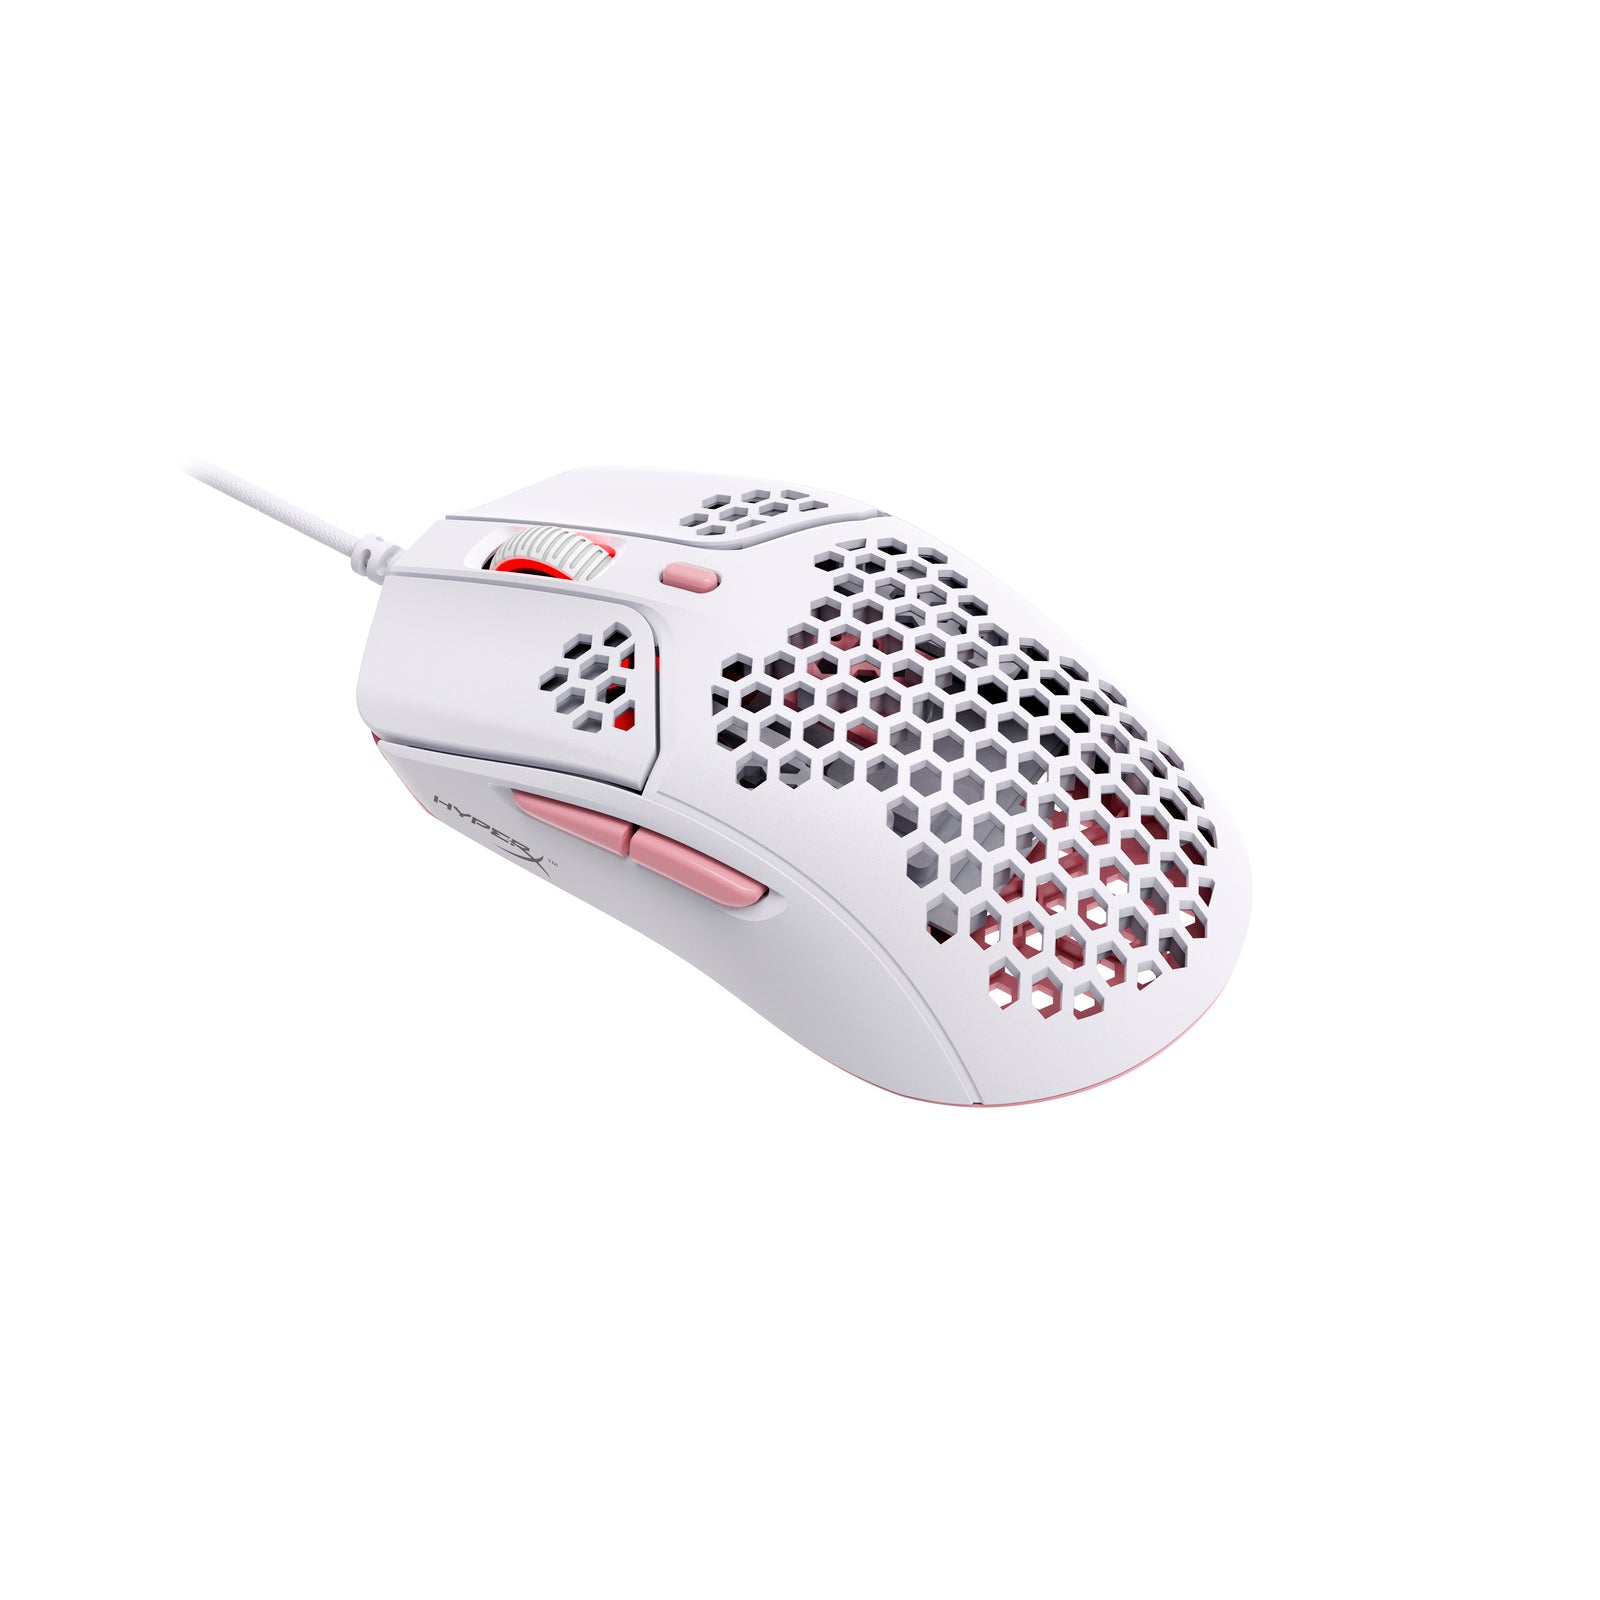 HyperX Pulsefire Haste – Gaming Mouse, Ultra-Lightweight, 59g